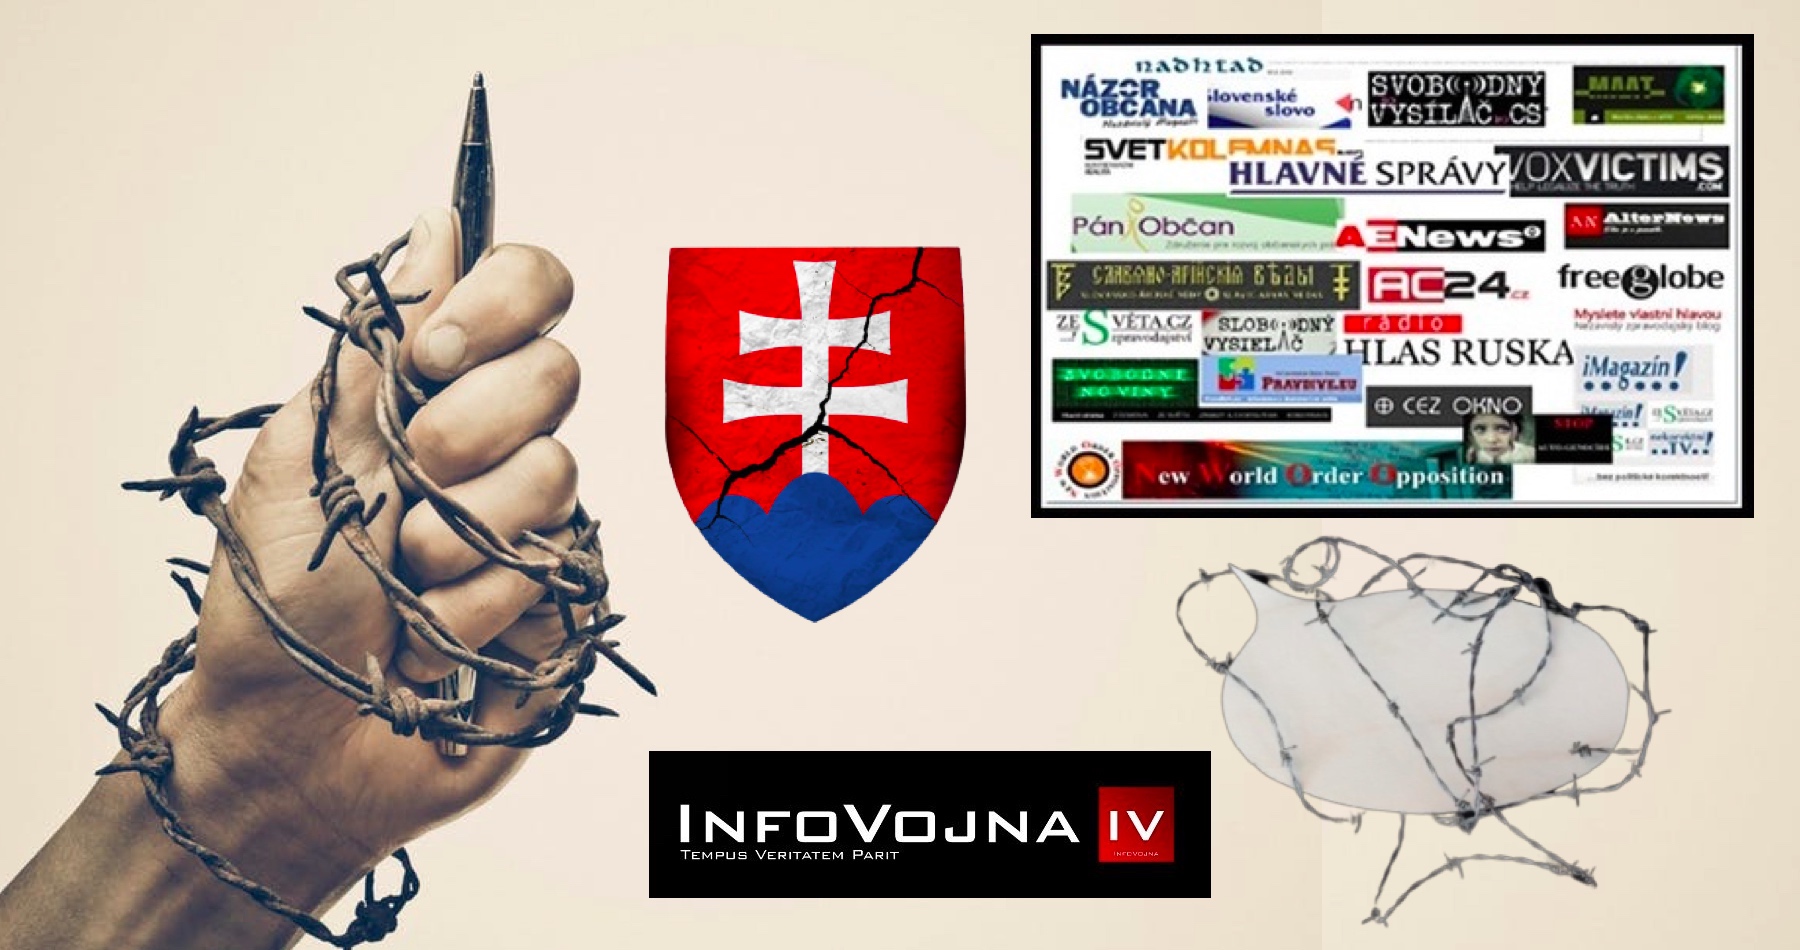 Národný bezpečnostný úrad už neblokuje InfoVojnu ani iné vlastenecké weby